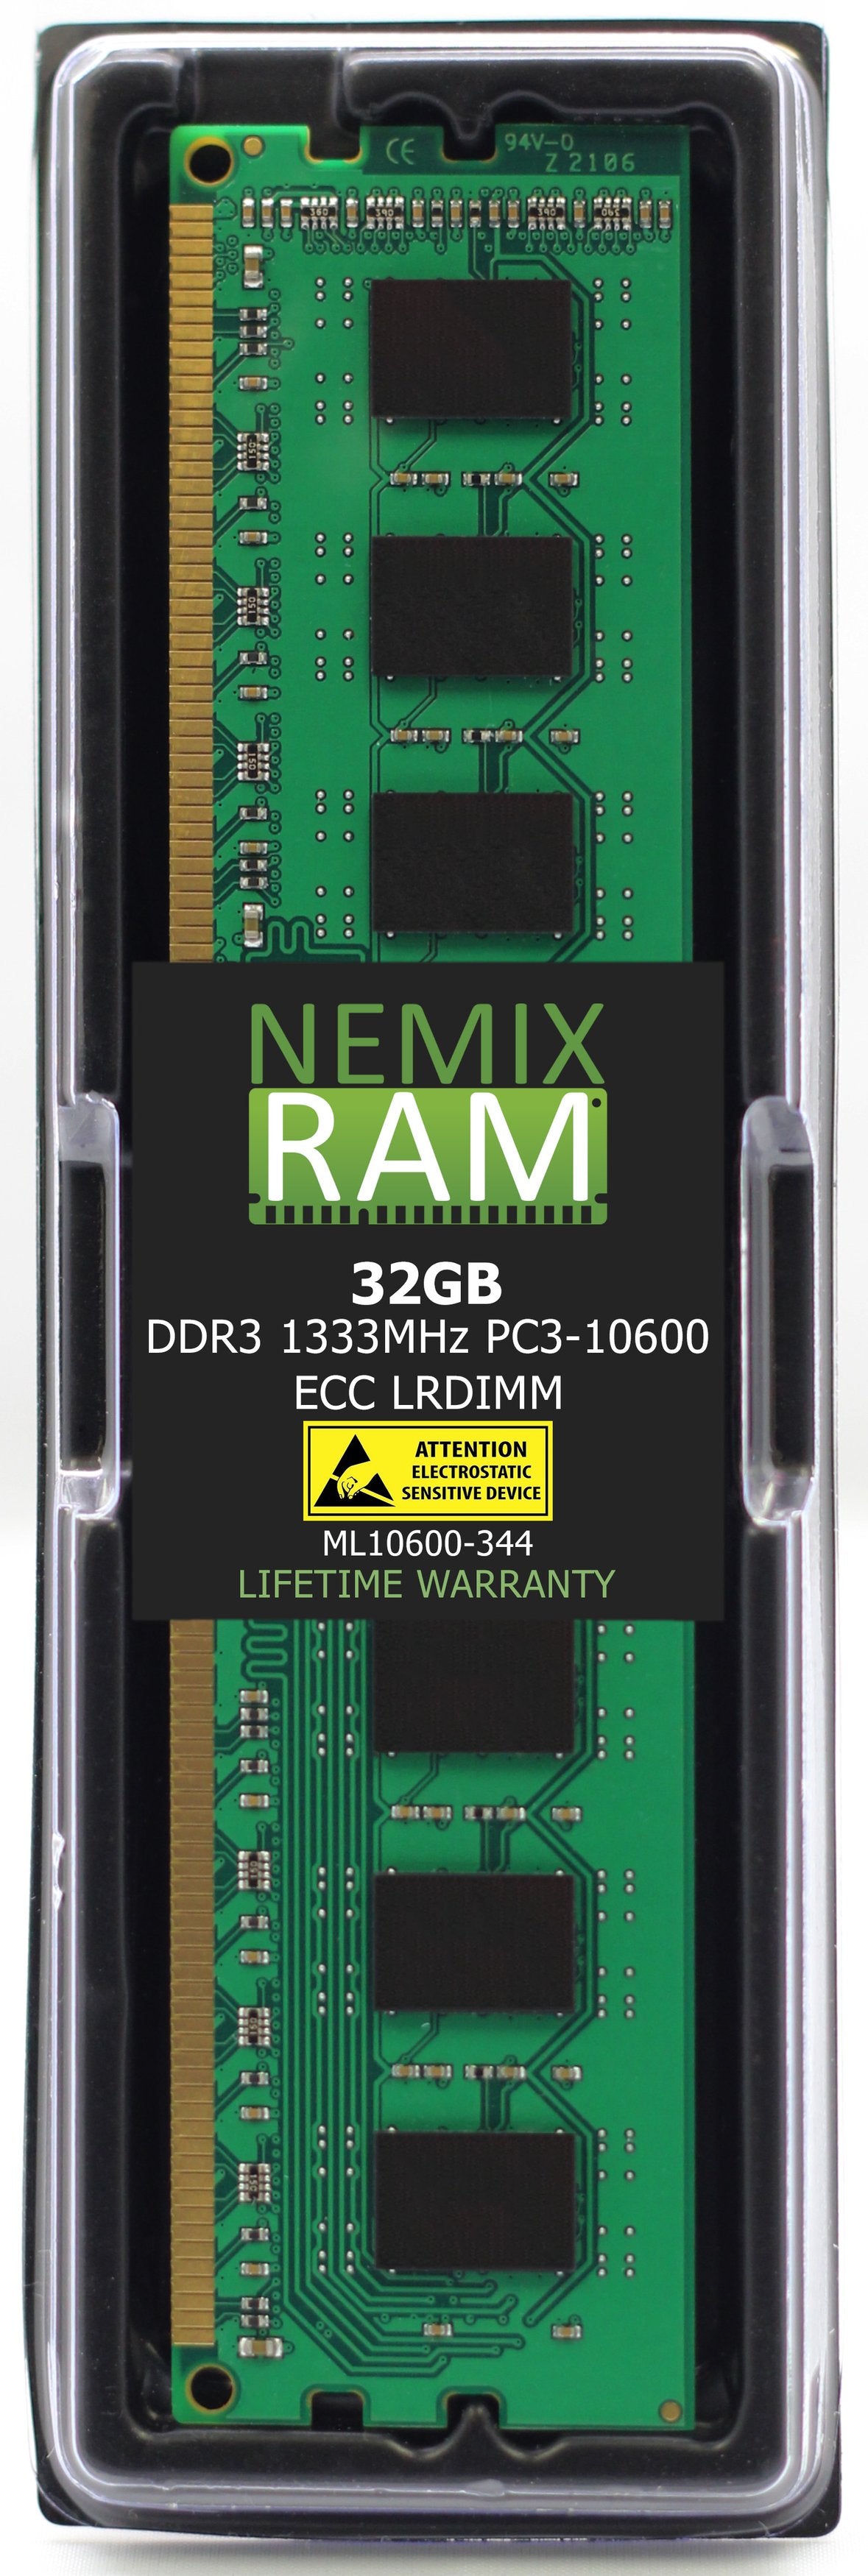 Hynix HMT84GL7AMR4C-H9 32GB DDR3 1333MHZ PC3-10600 LRDIMM Compatible Memory Module